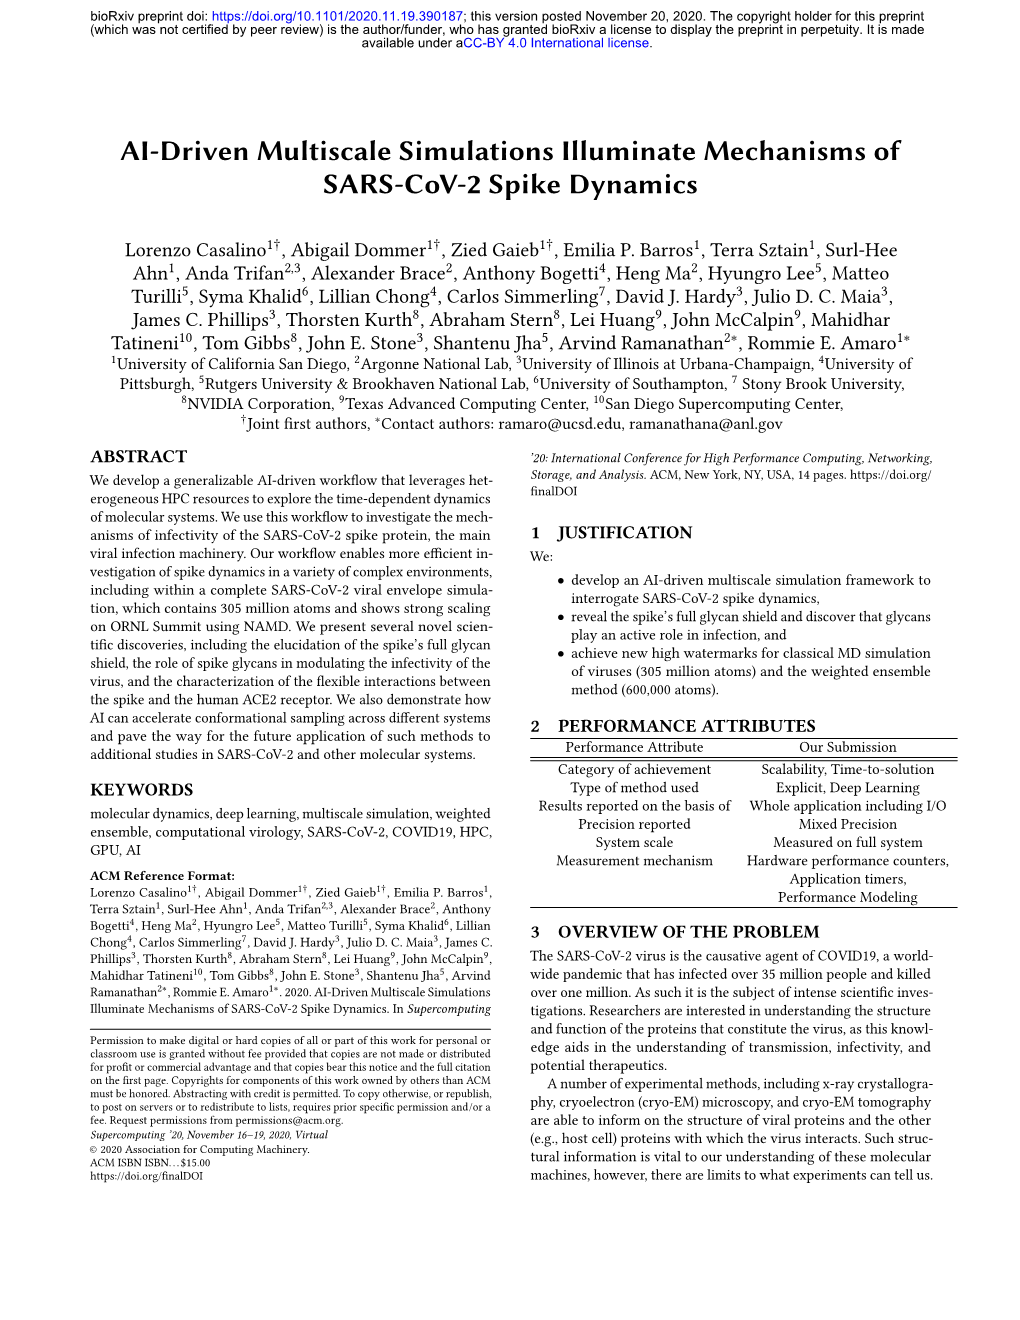 AI-Driven Multiscale Simulations Illuminate Mechanisms of SARS-Cov-2 Spike Dynamics